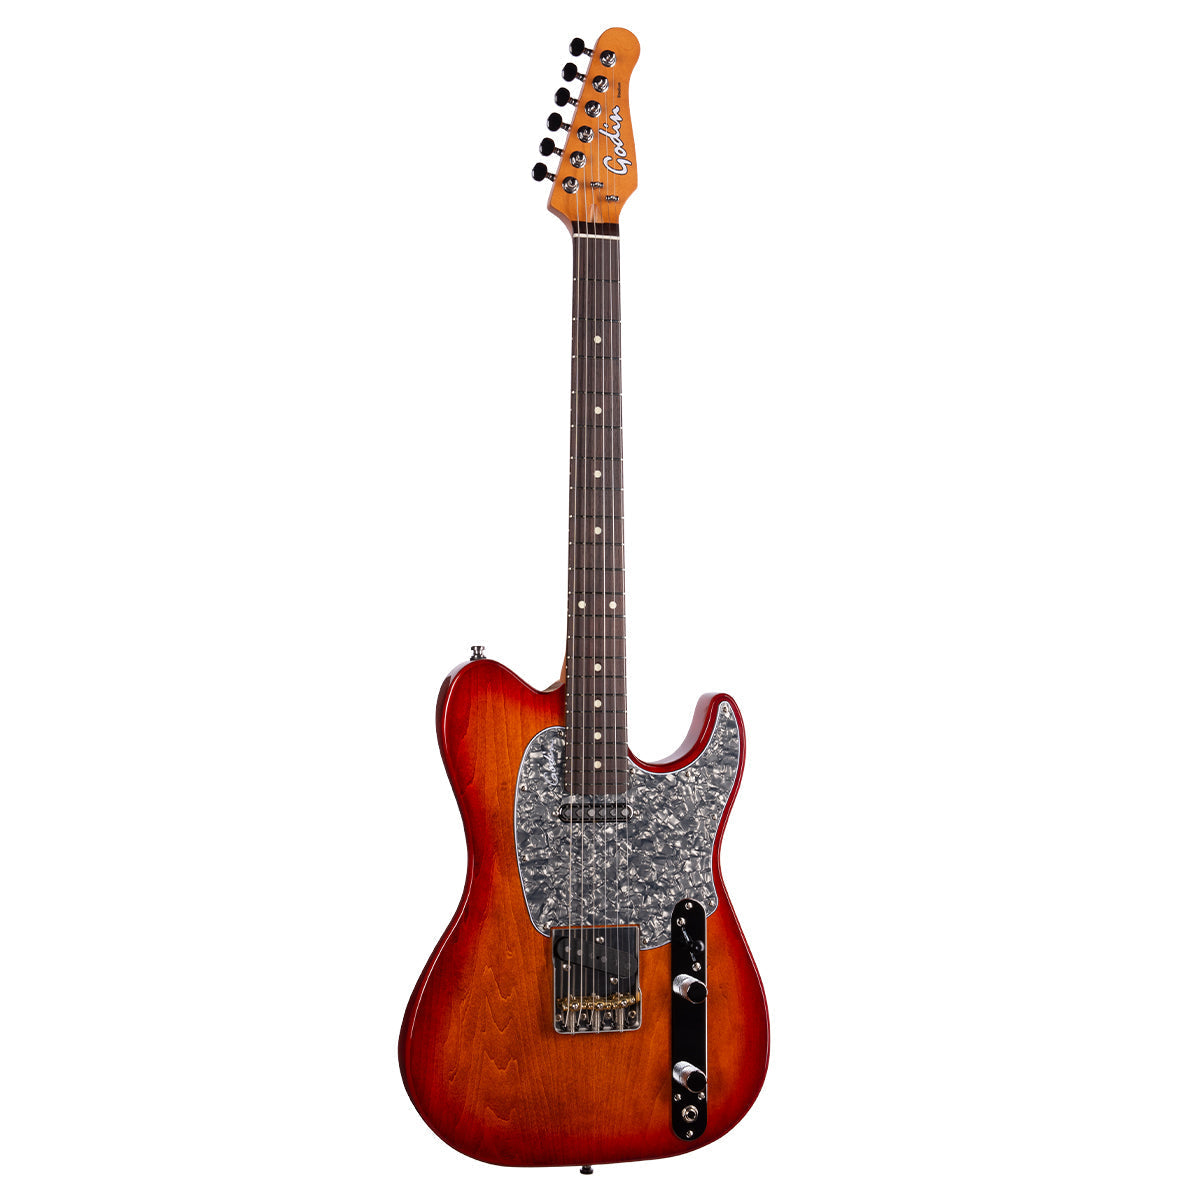 Godin Stadium Pro Electric Guitar ~ Sunset Burst RN, Electric Guitar for sale at Richards Guitars.